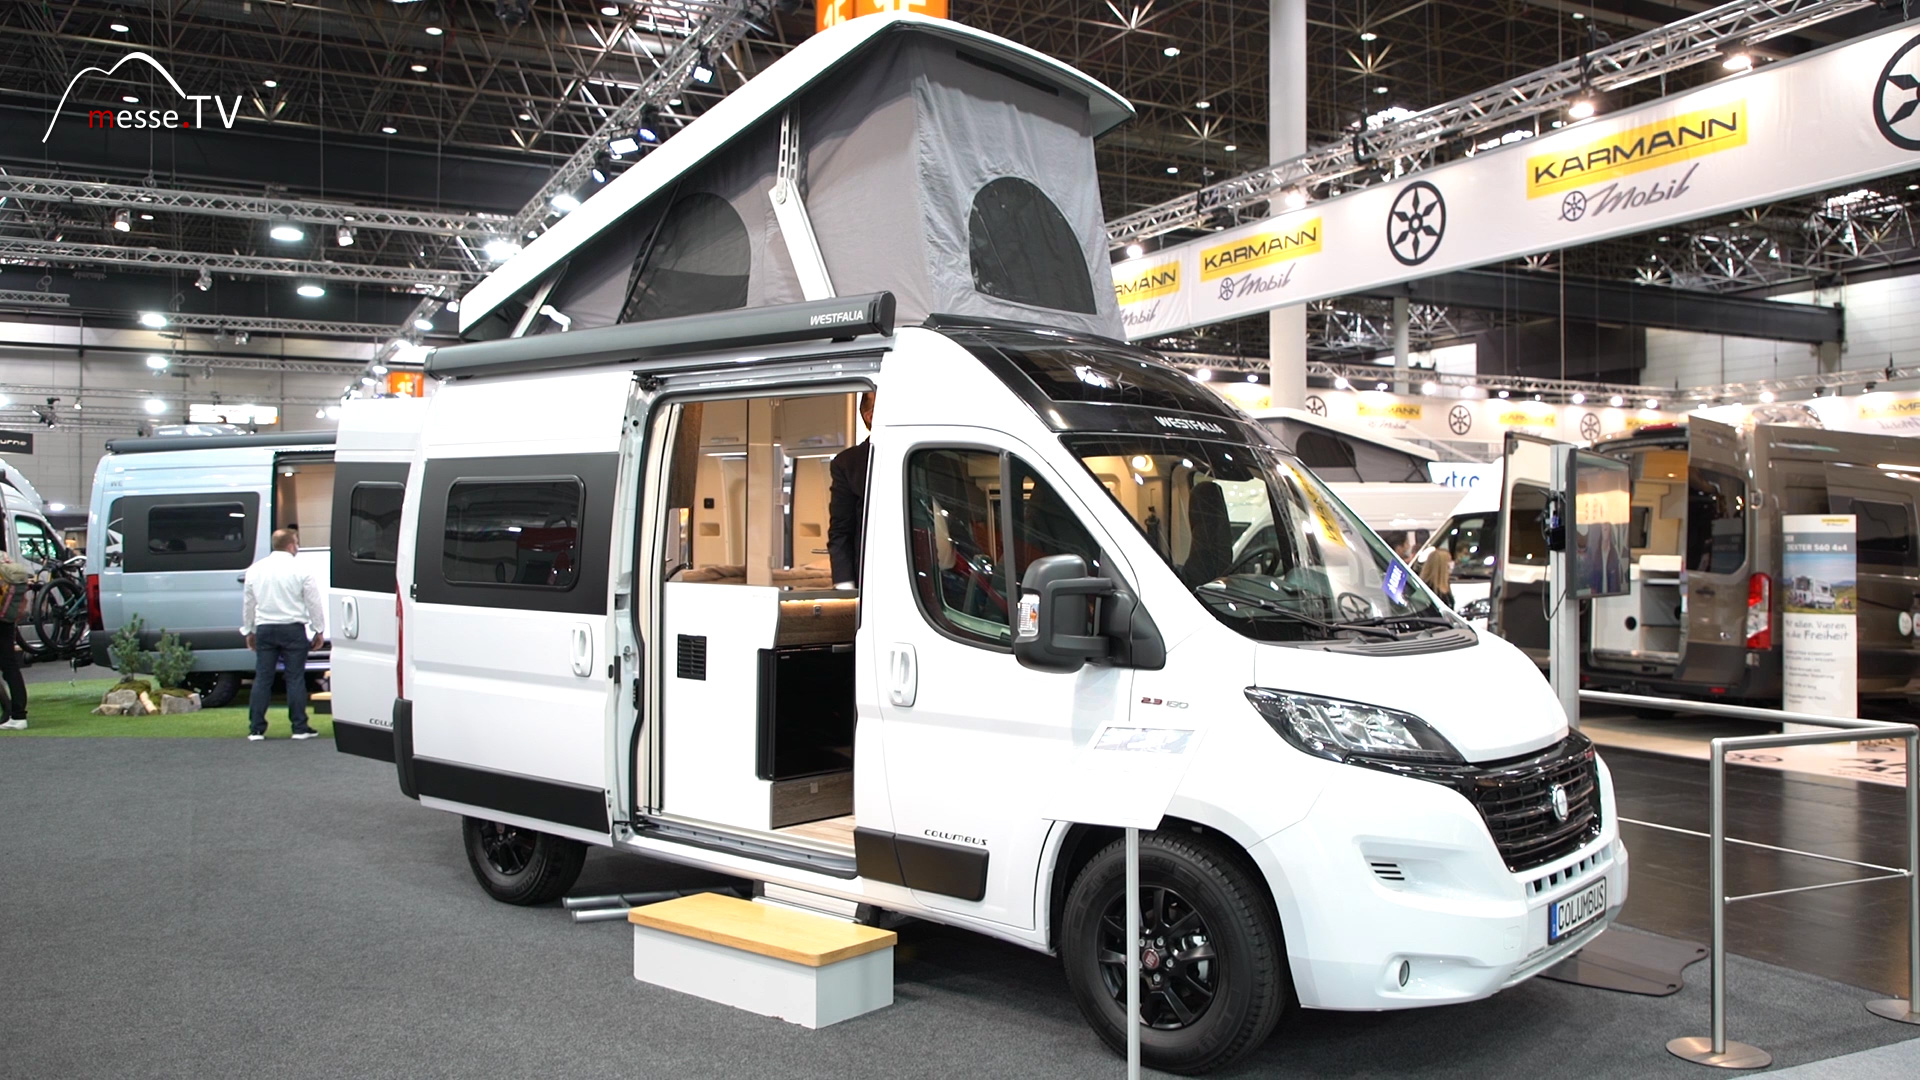 Reisemobil Columbus Westfalia Caravan Salon 2020 Duesseldorf